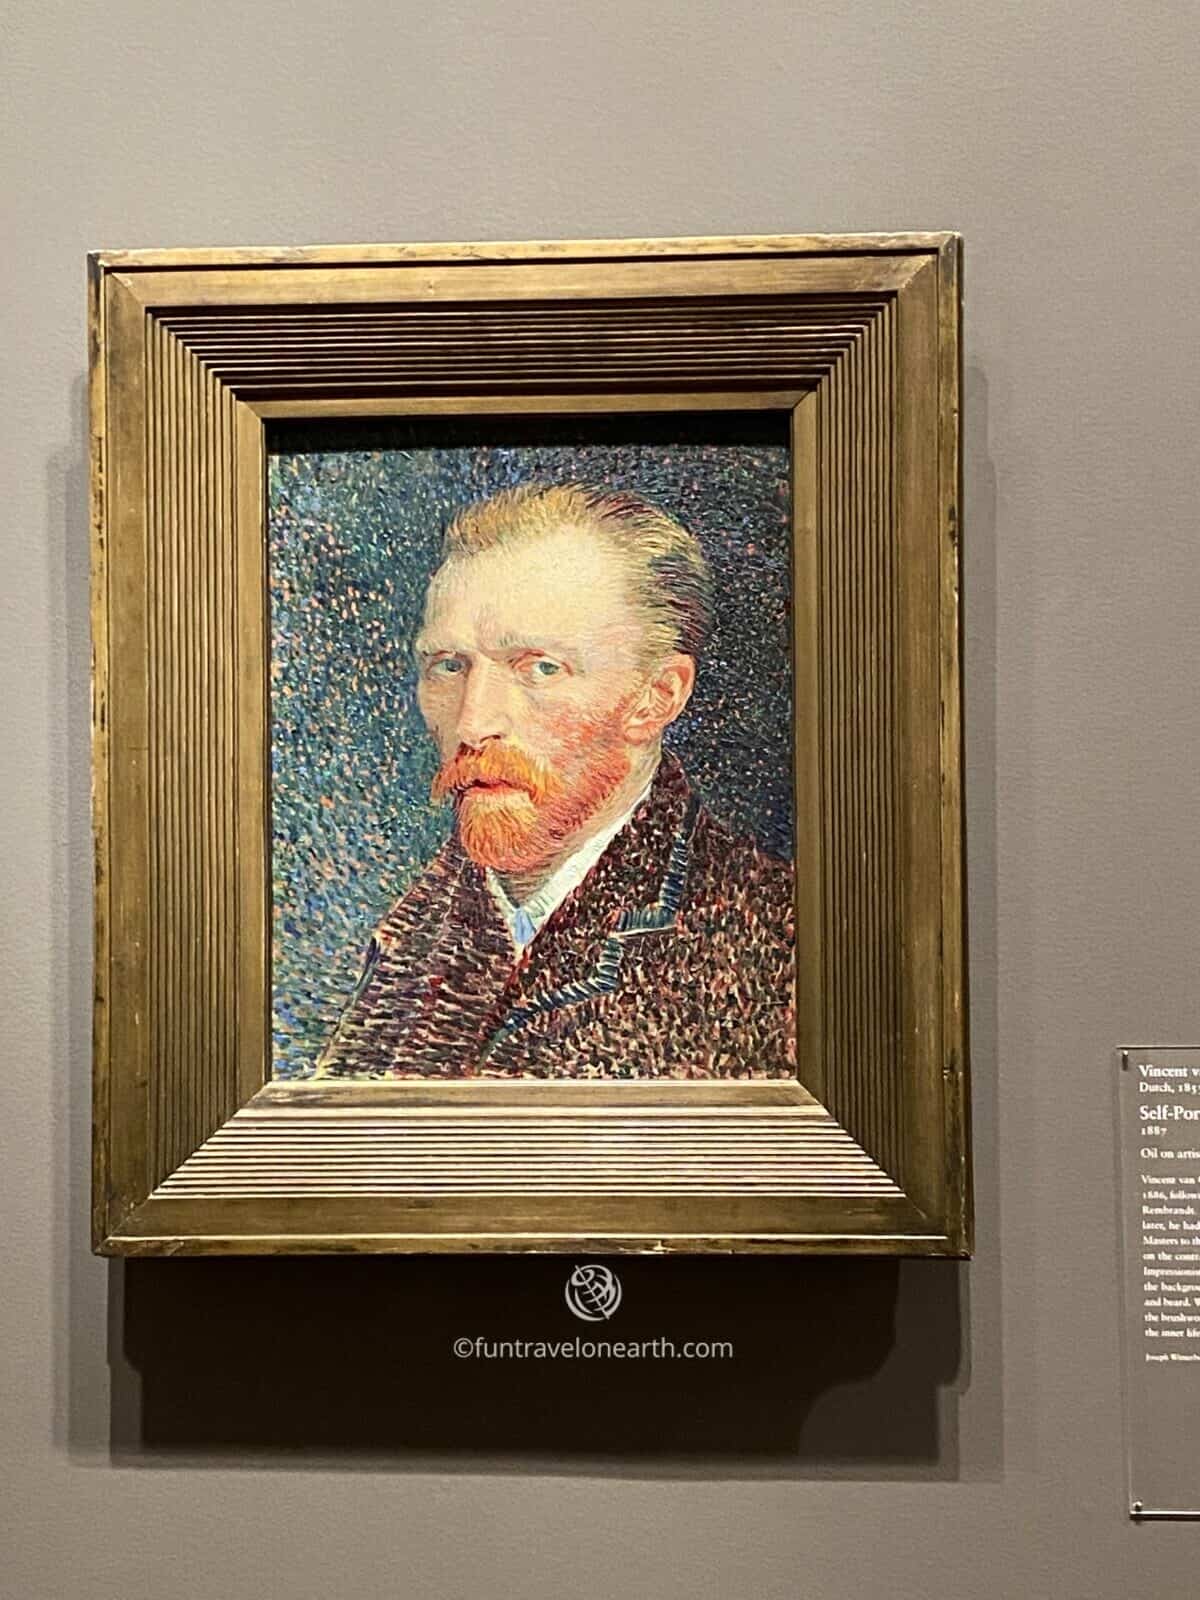 Vincent van Gogh "Self-Portrait" ,The Art Institute of Chicago